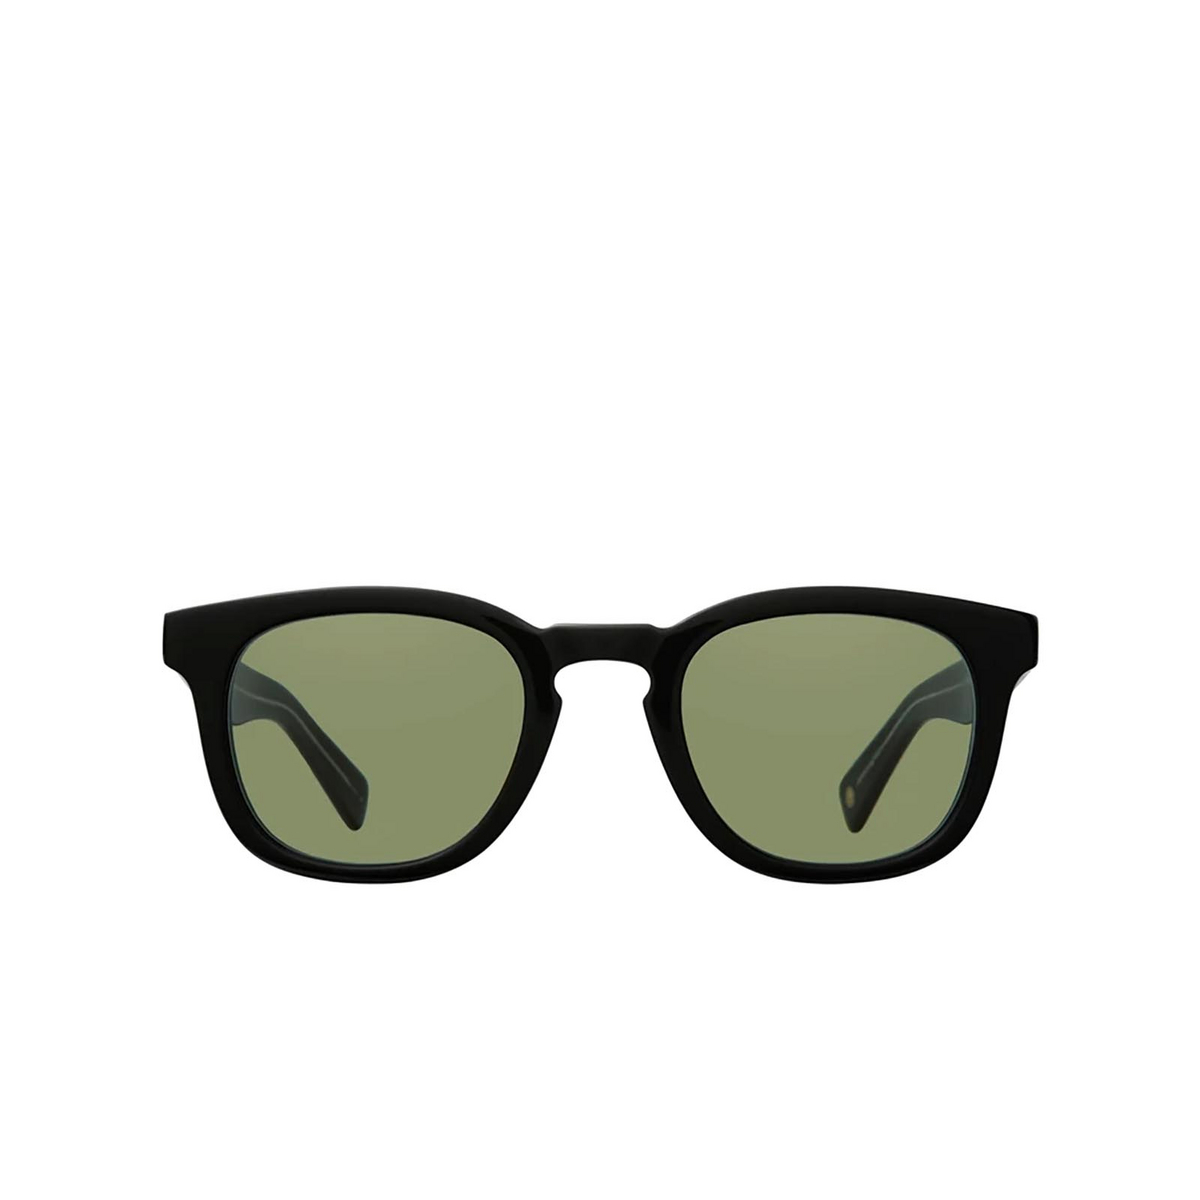 Garrett Leight® Square Sunglasses: Kinney X Sun color Black Bk-vvg - front view.